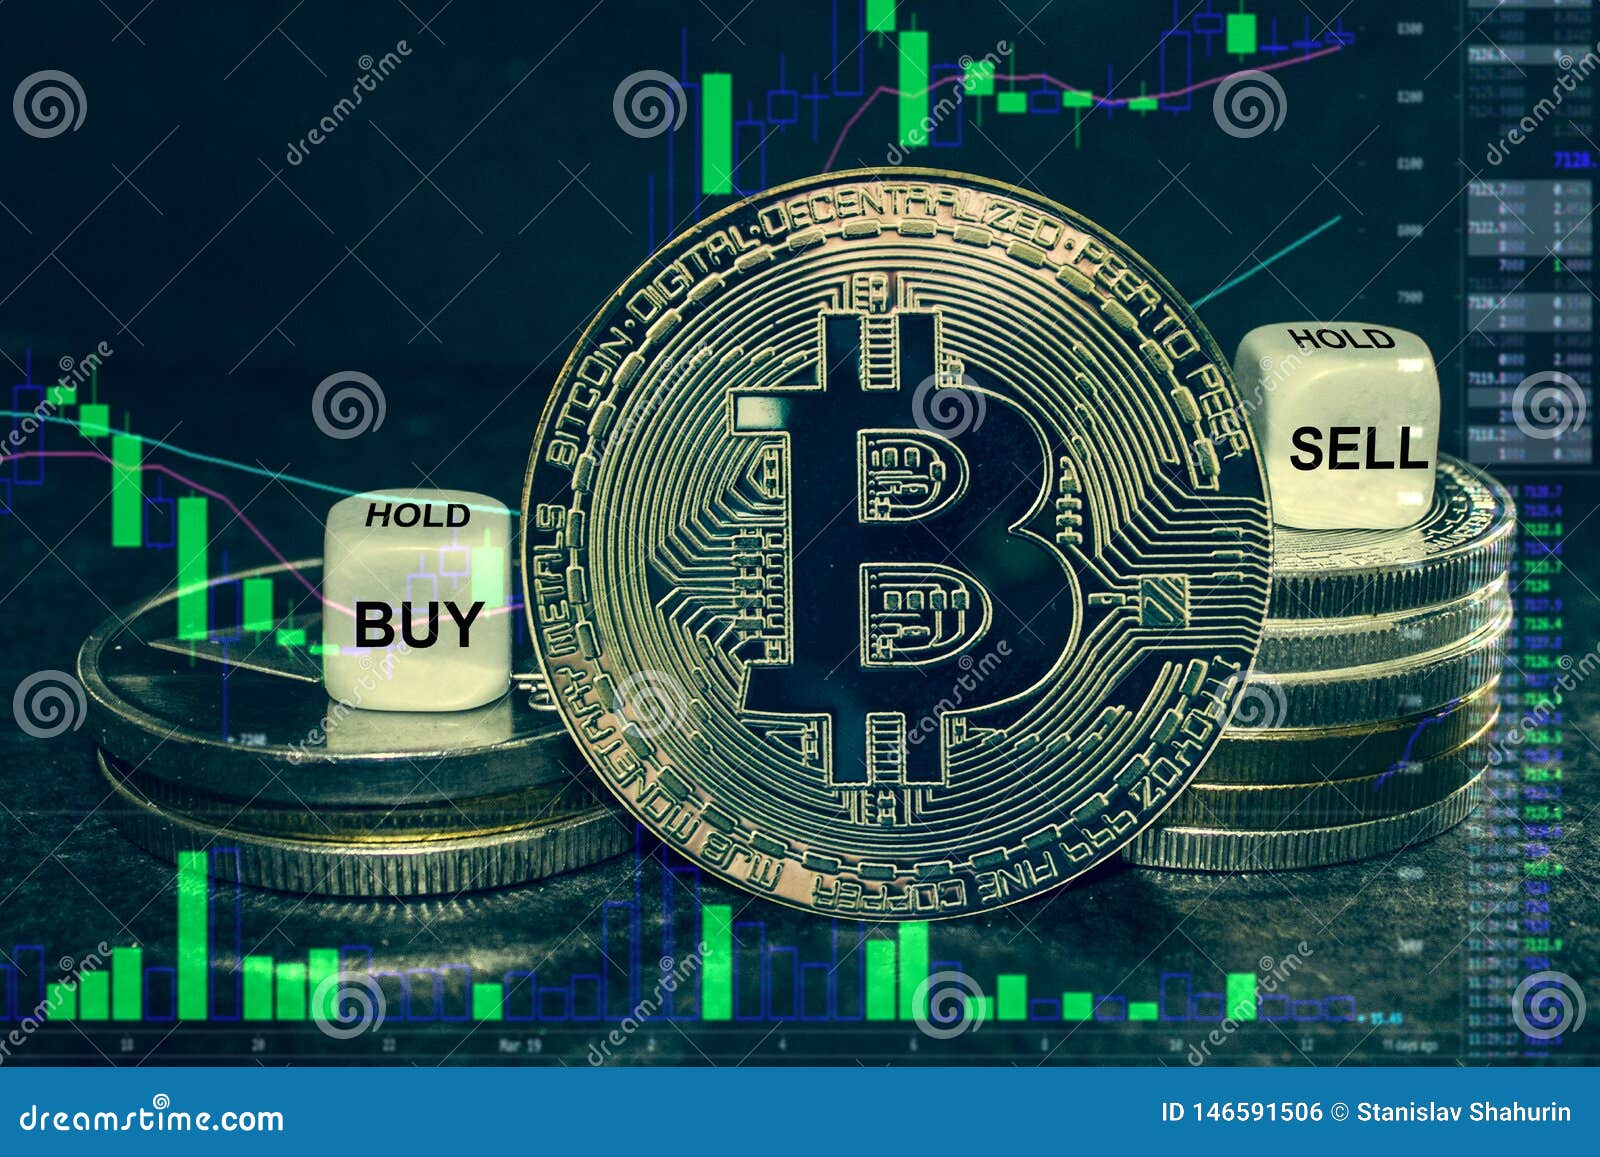 How To Buy Bitcoin (BTC) – Forbes Advisor Canada